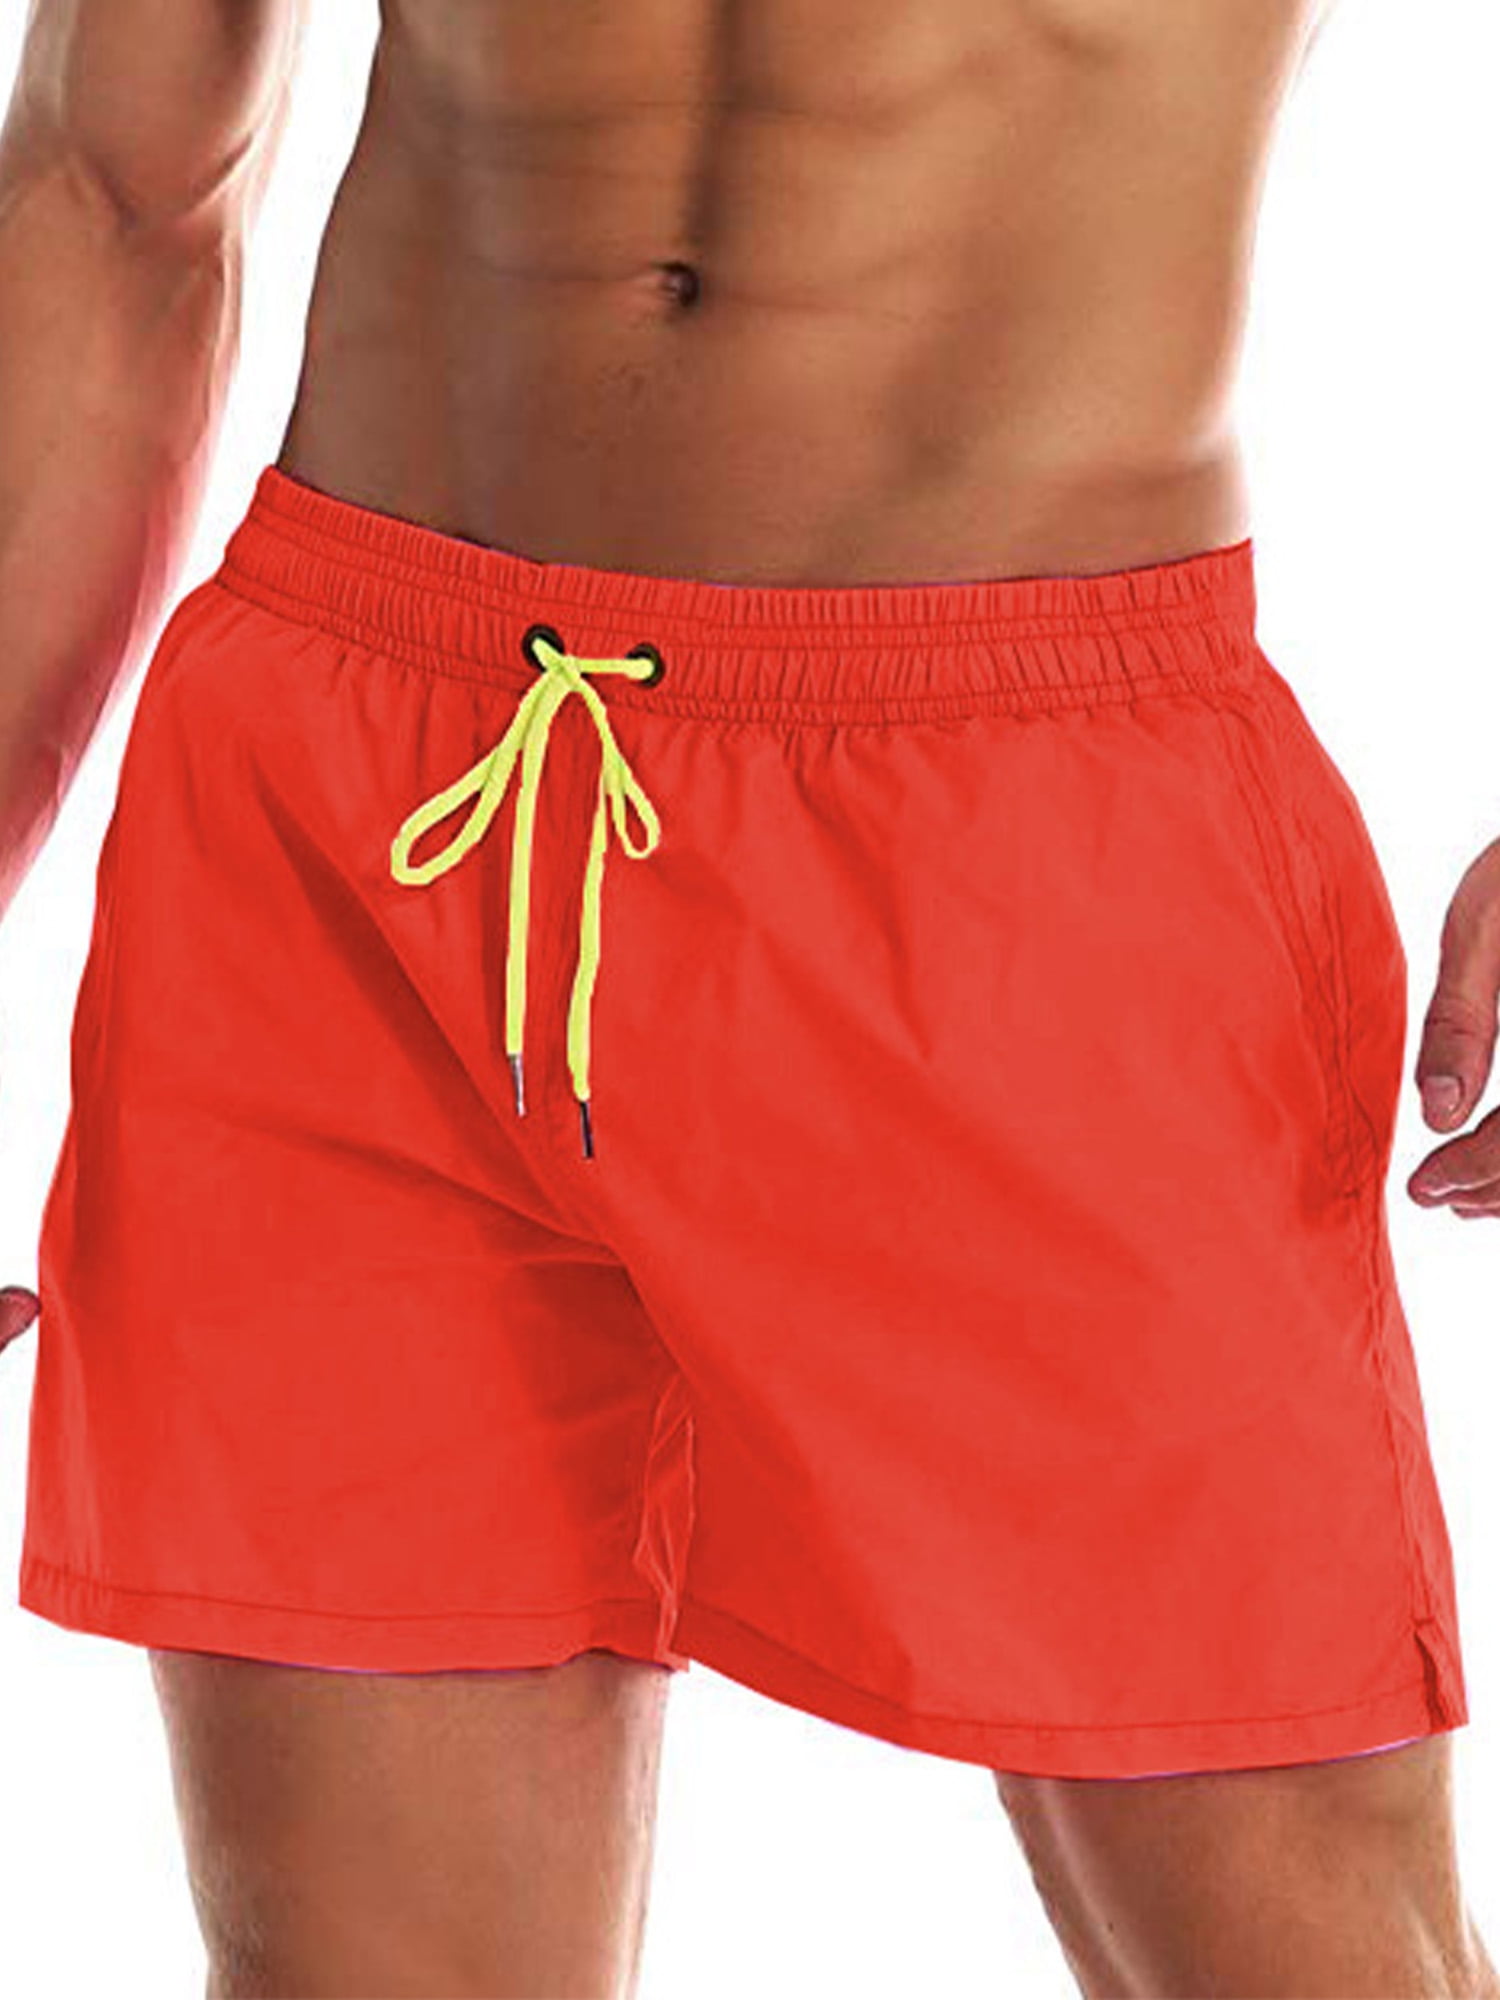 Mens Quick Dry shorts Training running board shorts Trunks Swimwear Beach Summer 